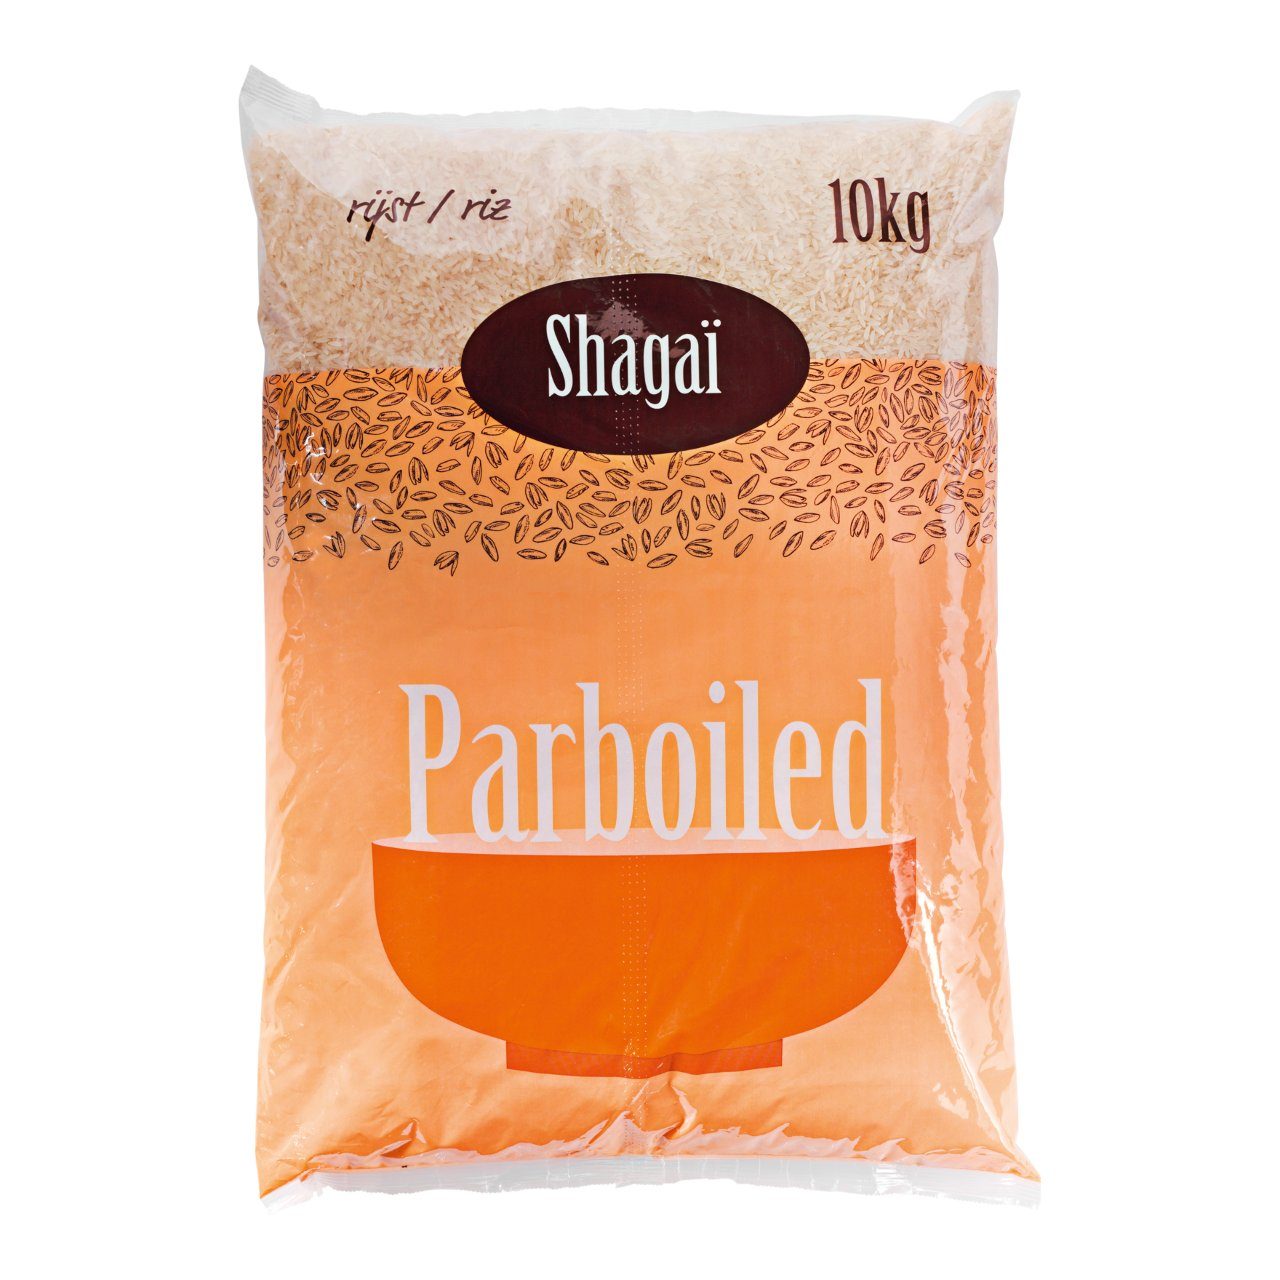 Triviaal verachten Bewolkt Shagaï Parboiled rijst Zak 10 kilo | dekweker.nl